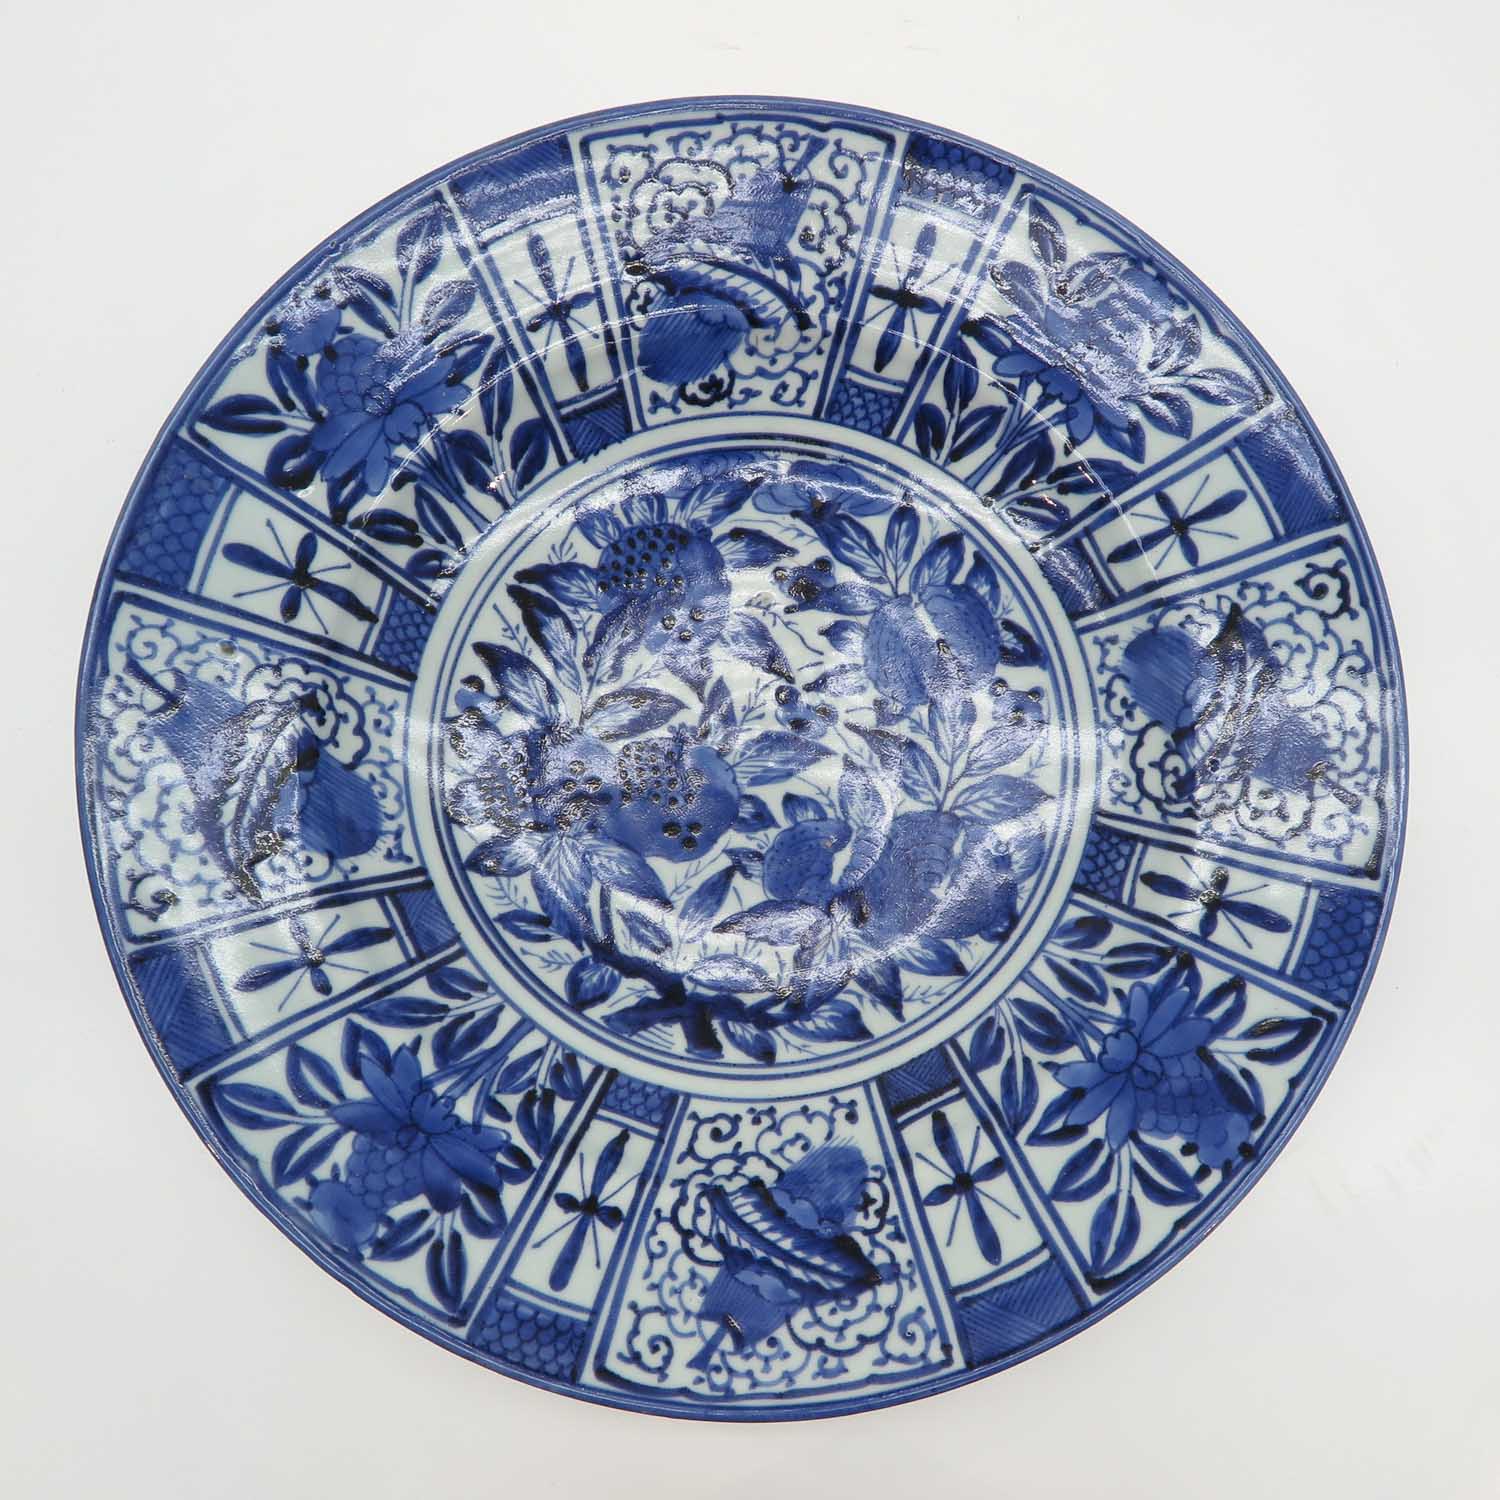 Japanese Porcelain Plate Circa 1700